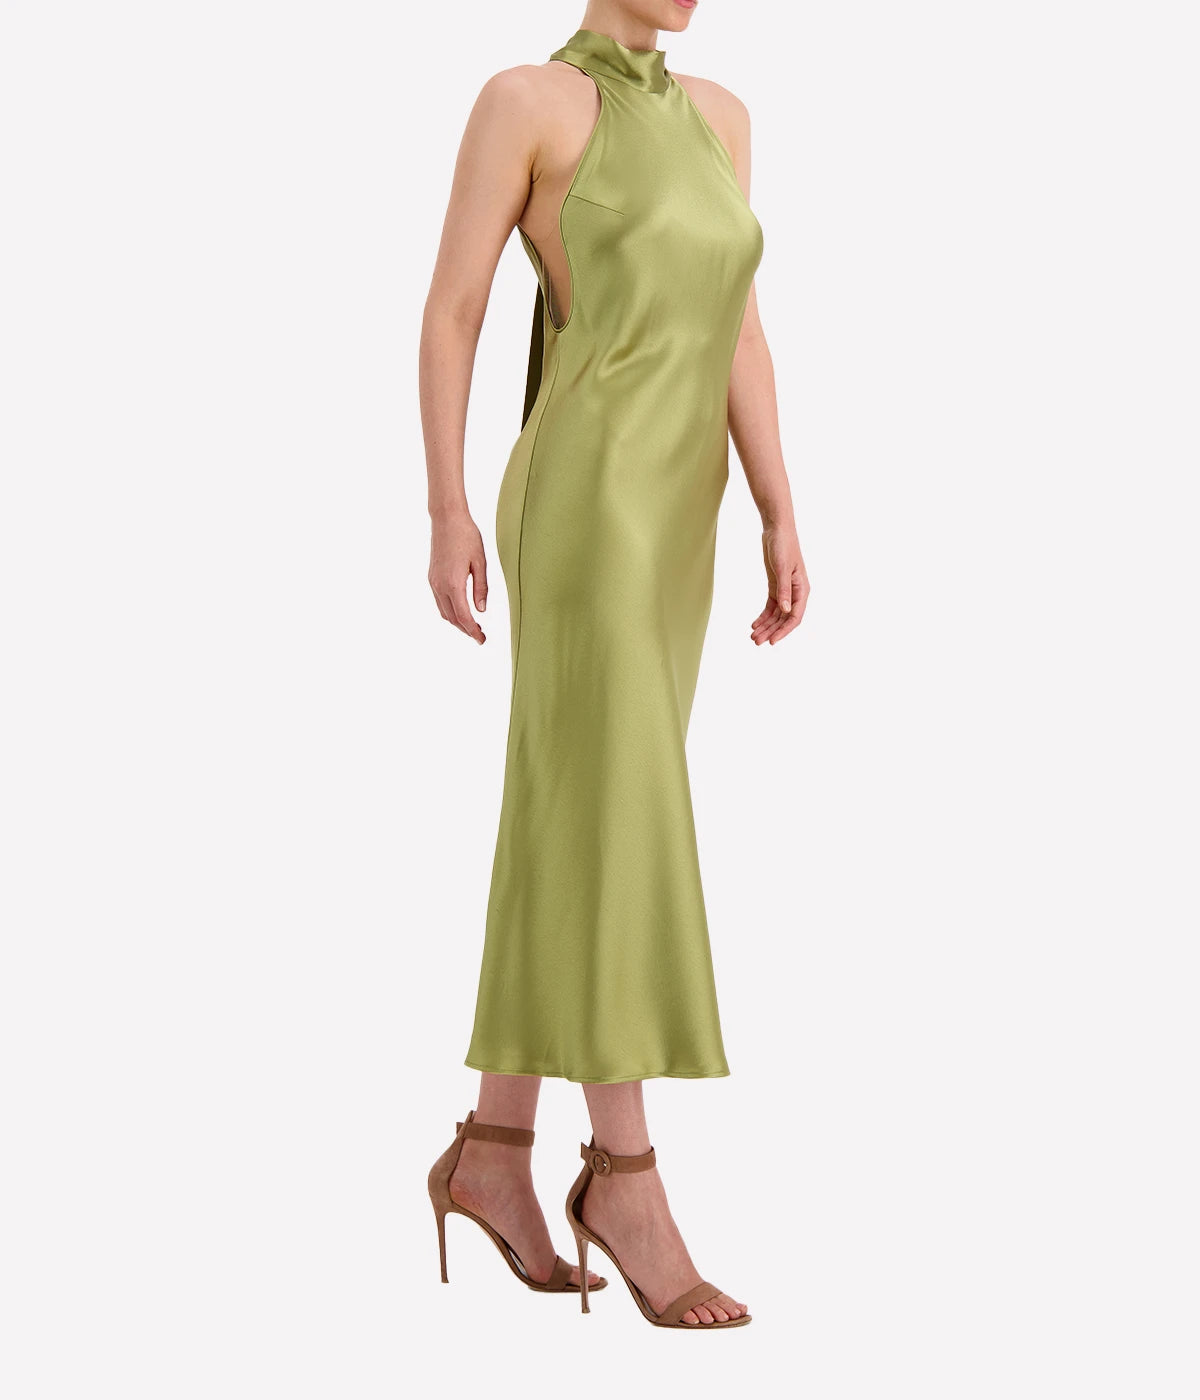 Scallop Sienna Dress in Olive